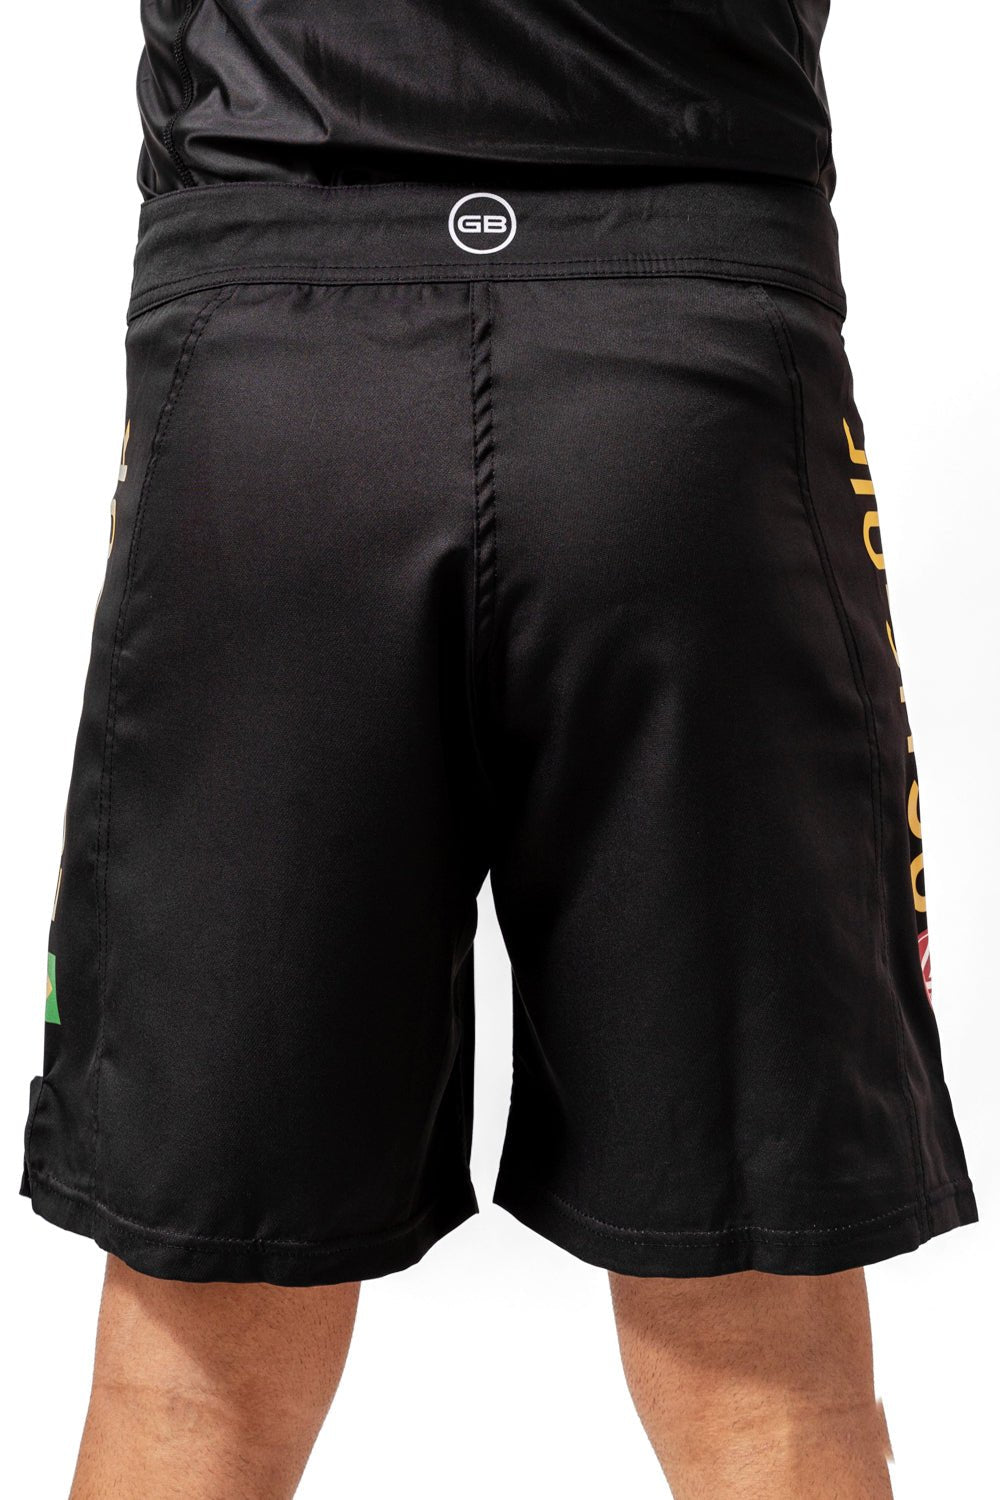 GB Lutador Velcro Training Shorts - Black